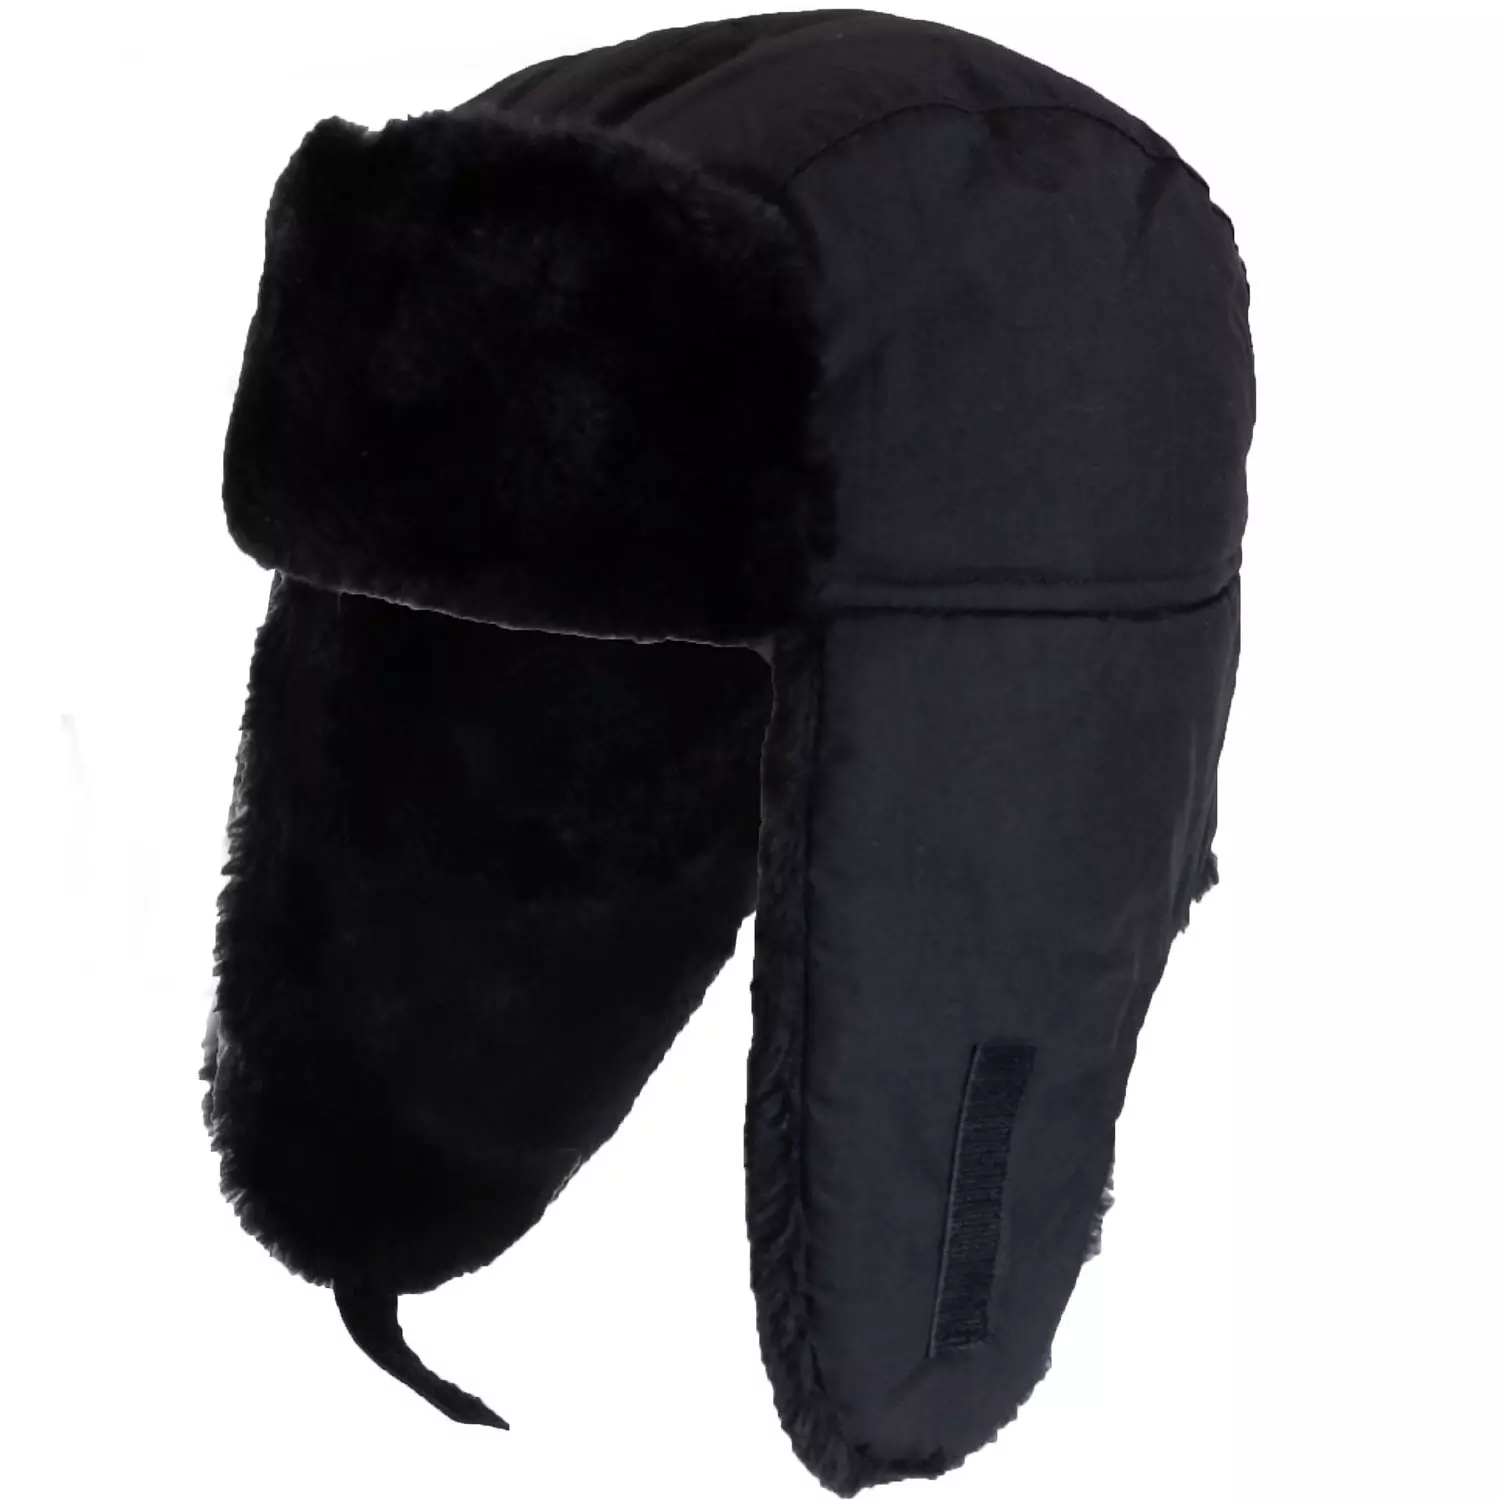 Nylon aviator hat with faux fur lining & trims, black